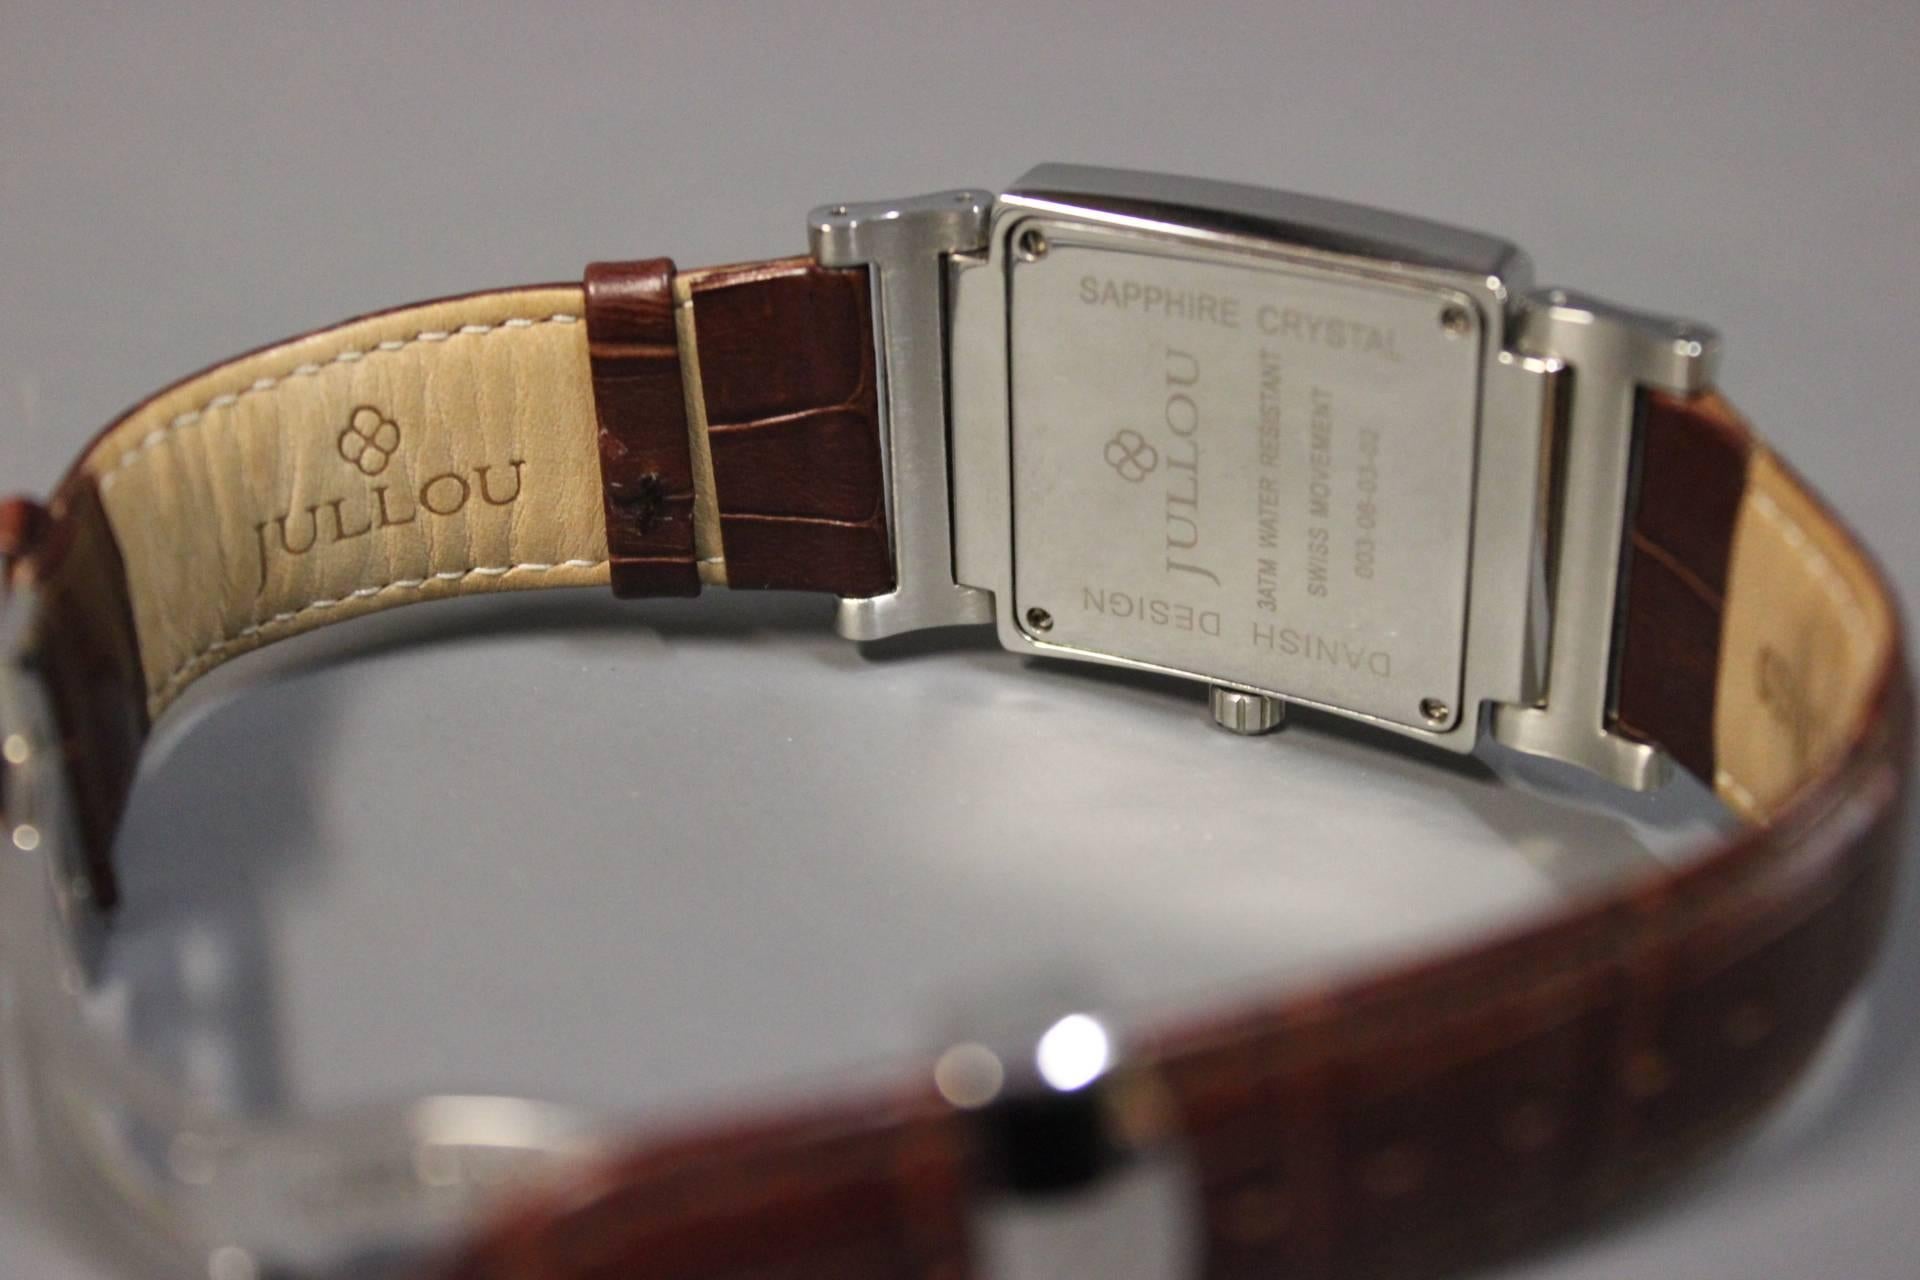 Steel Jullou Men's Wristwatch of Danish Design Embodied with Diamonds